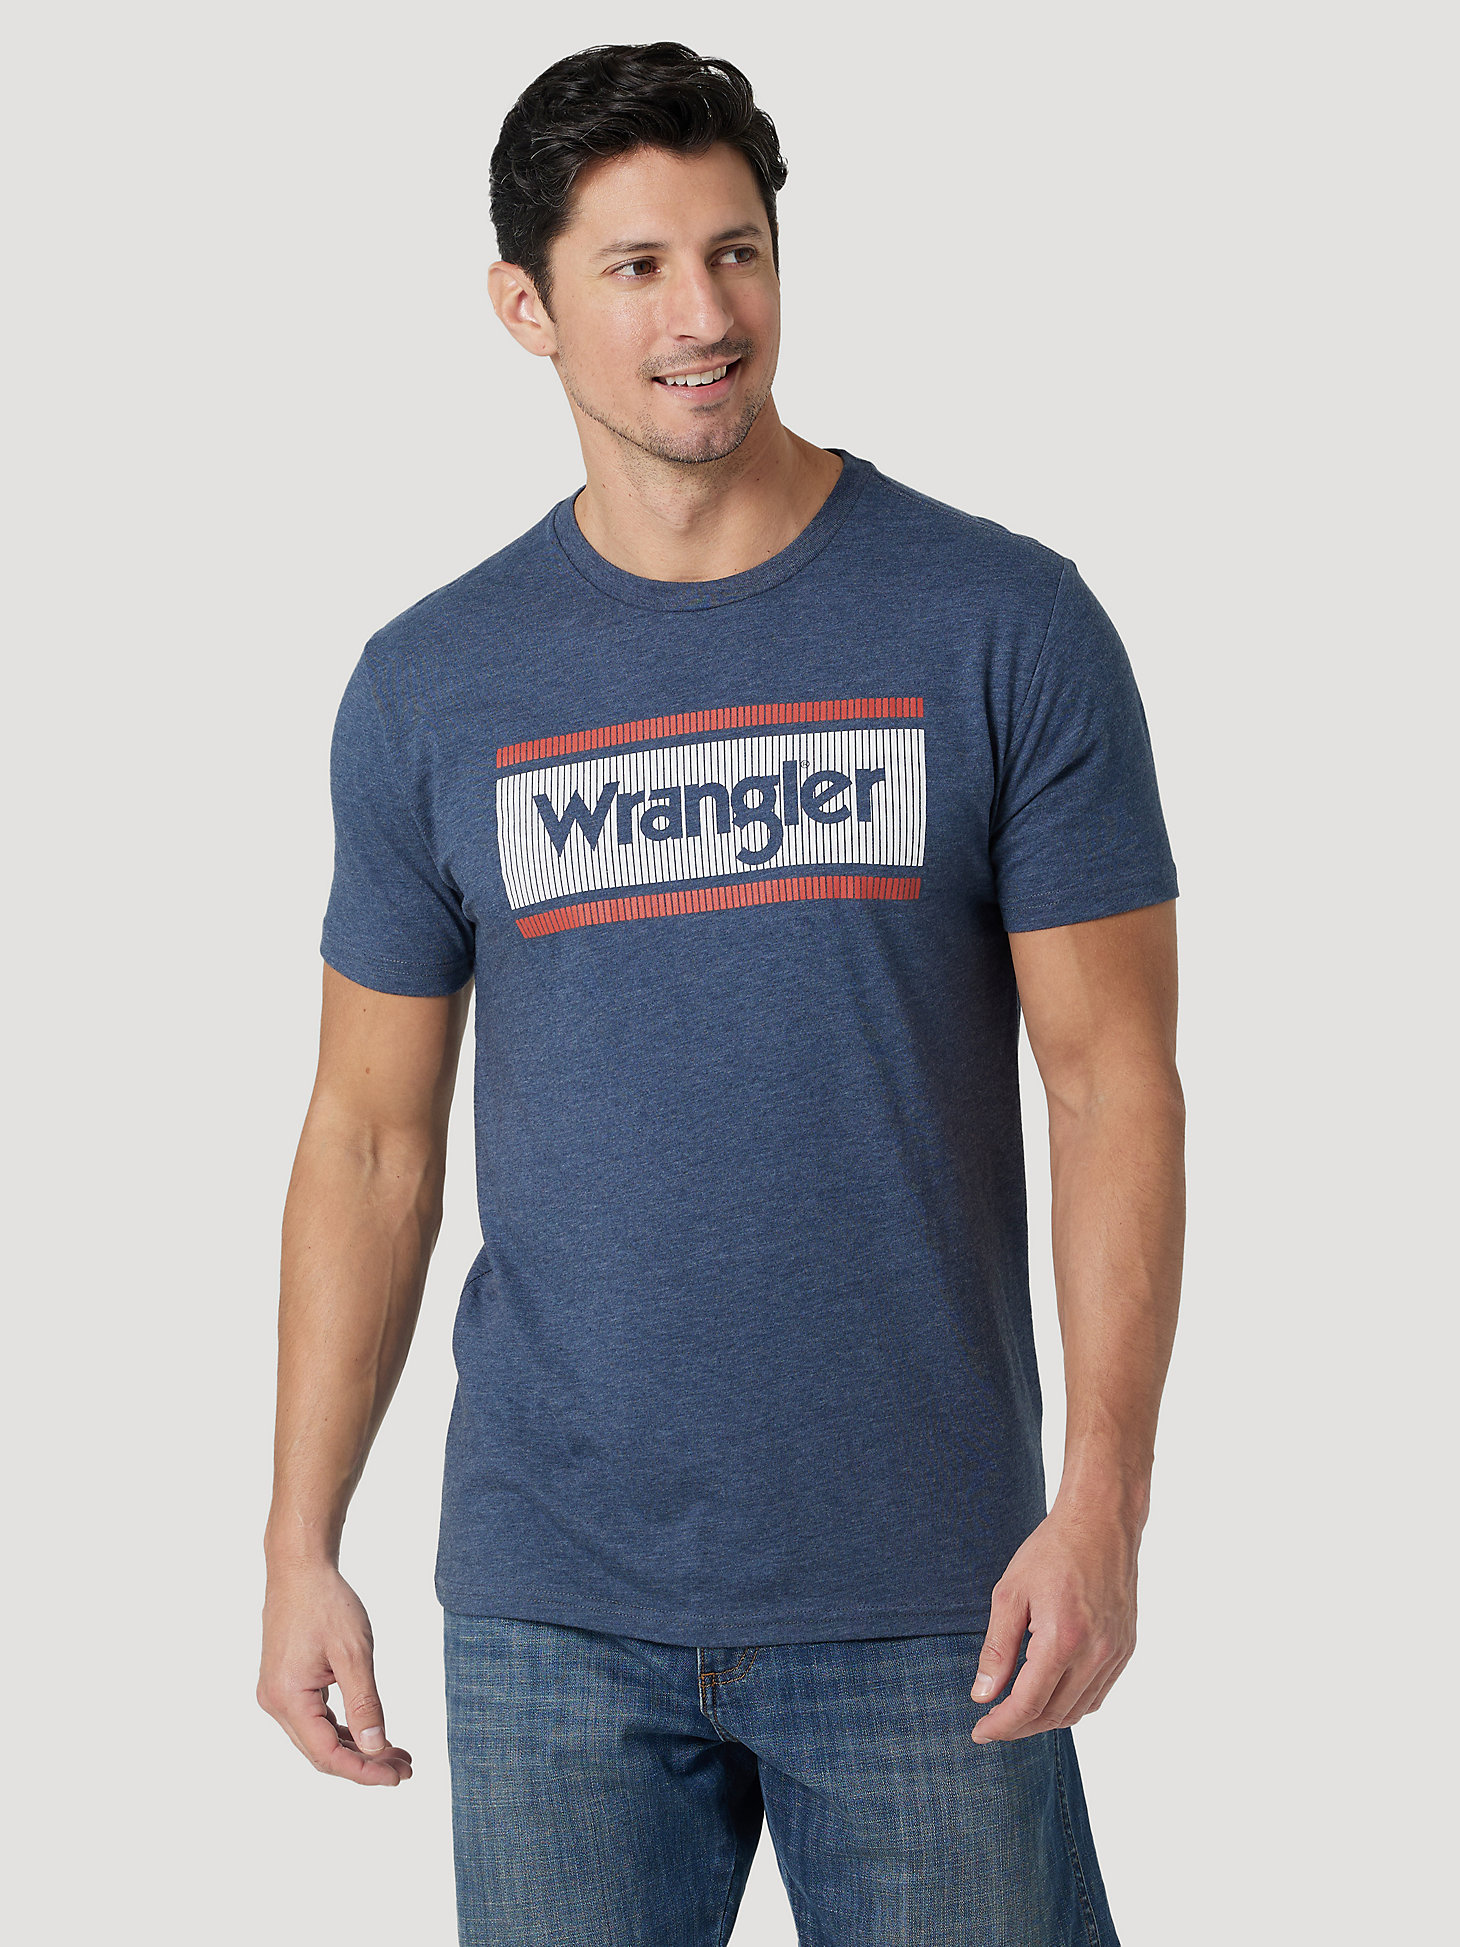 Men's Classic Wrangler Logo Tag T-Shirt in Navy Heather alternative view 1